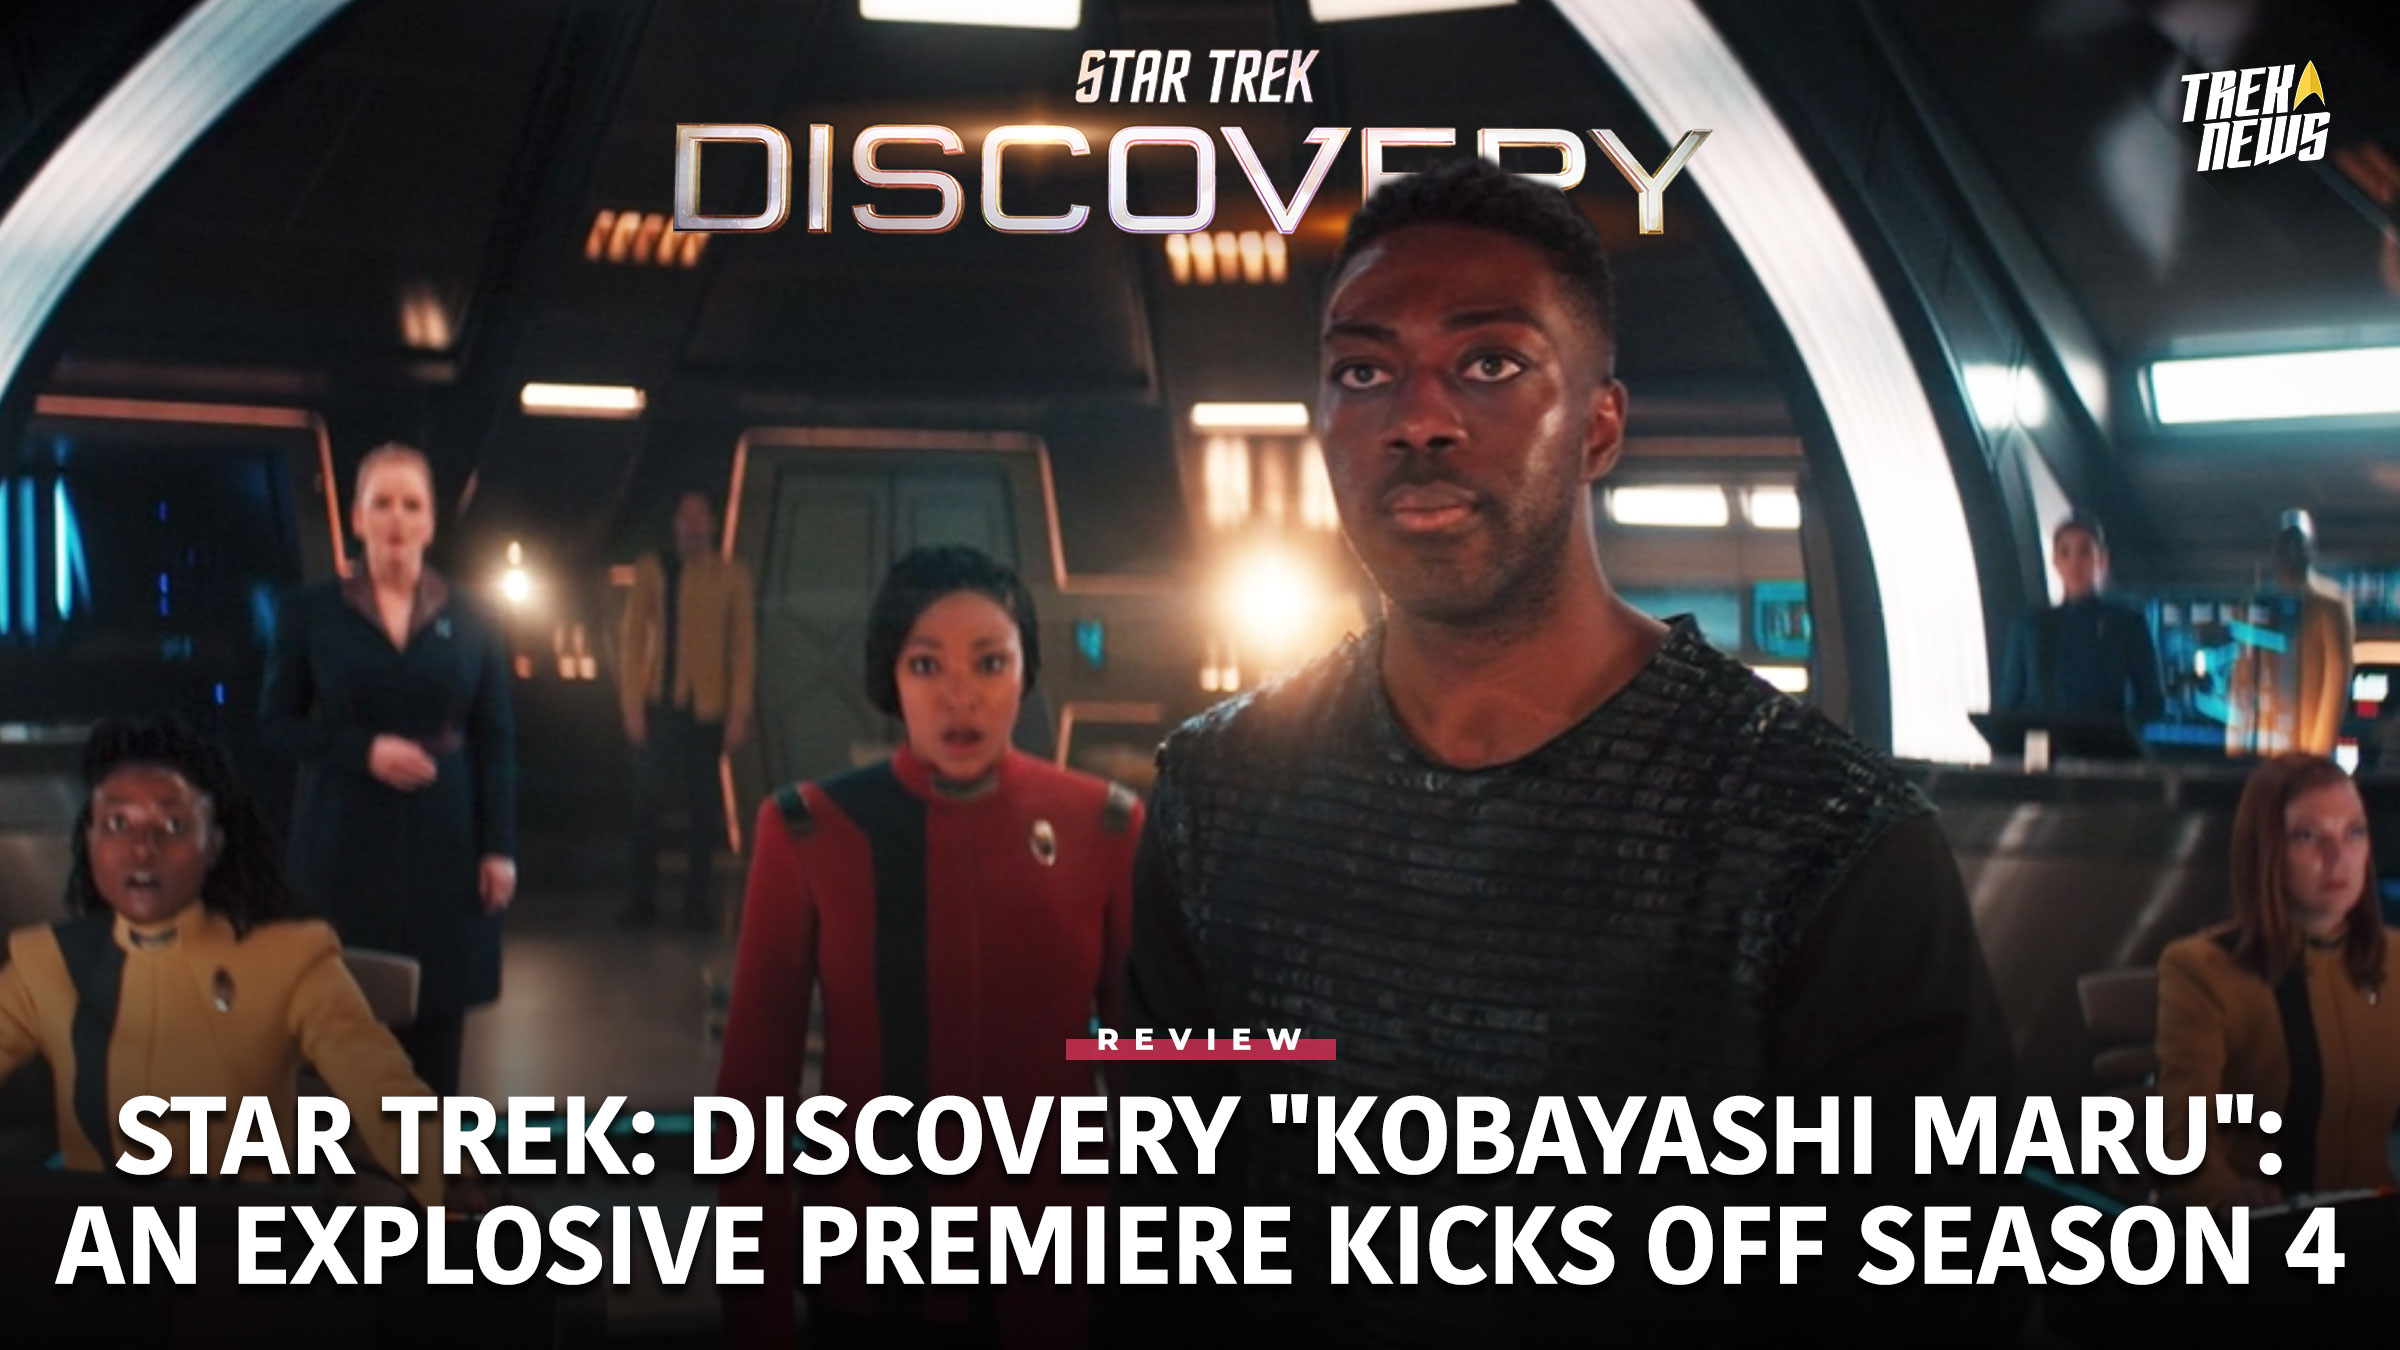 Star Trek: Discovery “Kobayashi Maru” Review: An Explosive Premiere Kicks Off Season 4